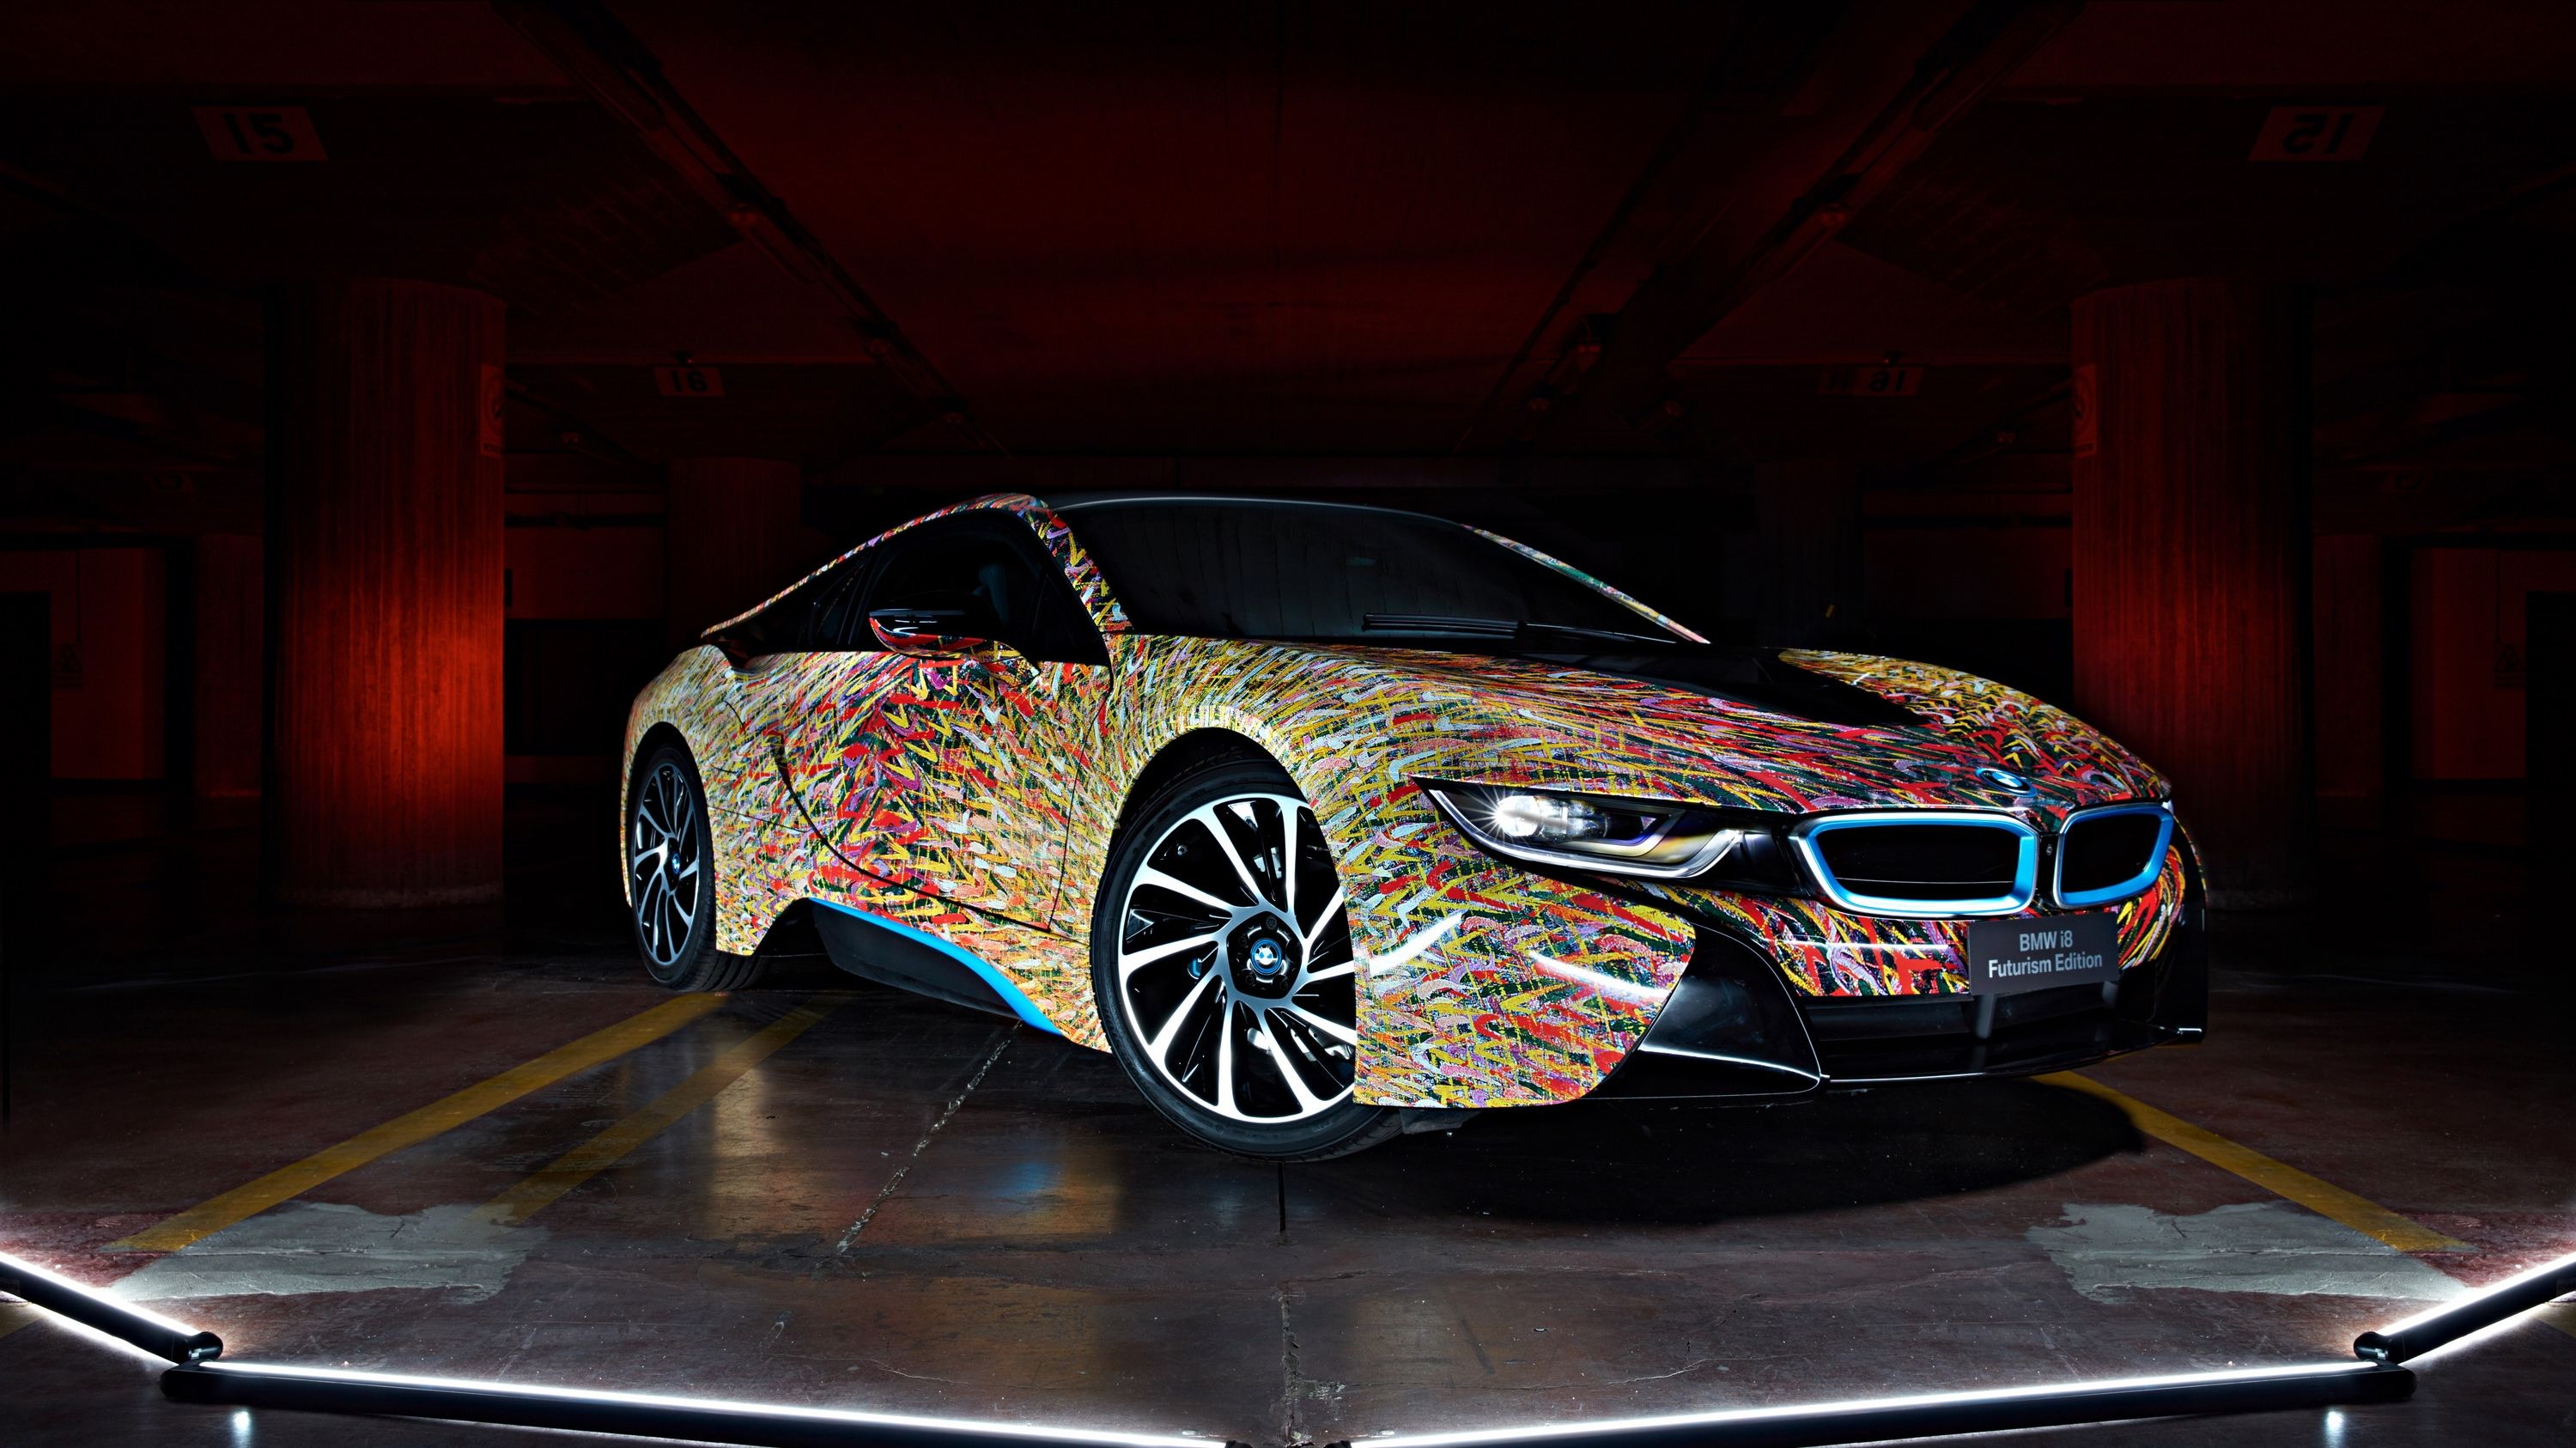 2016 BMW i8 Futurism Edition